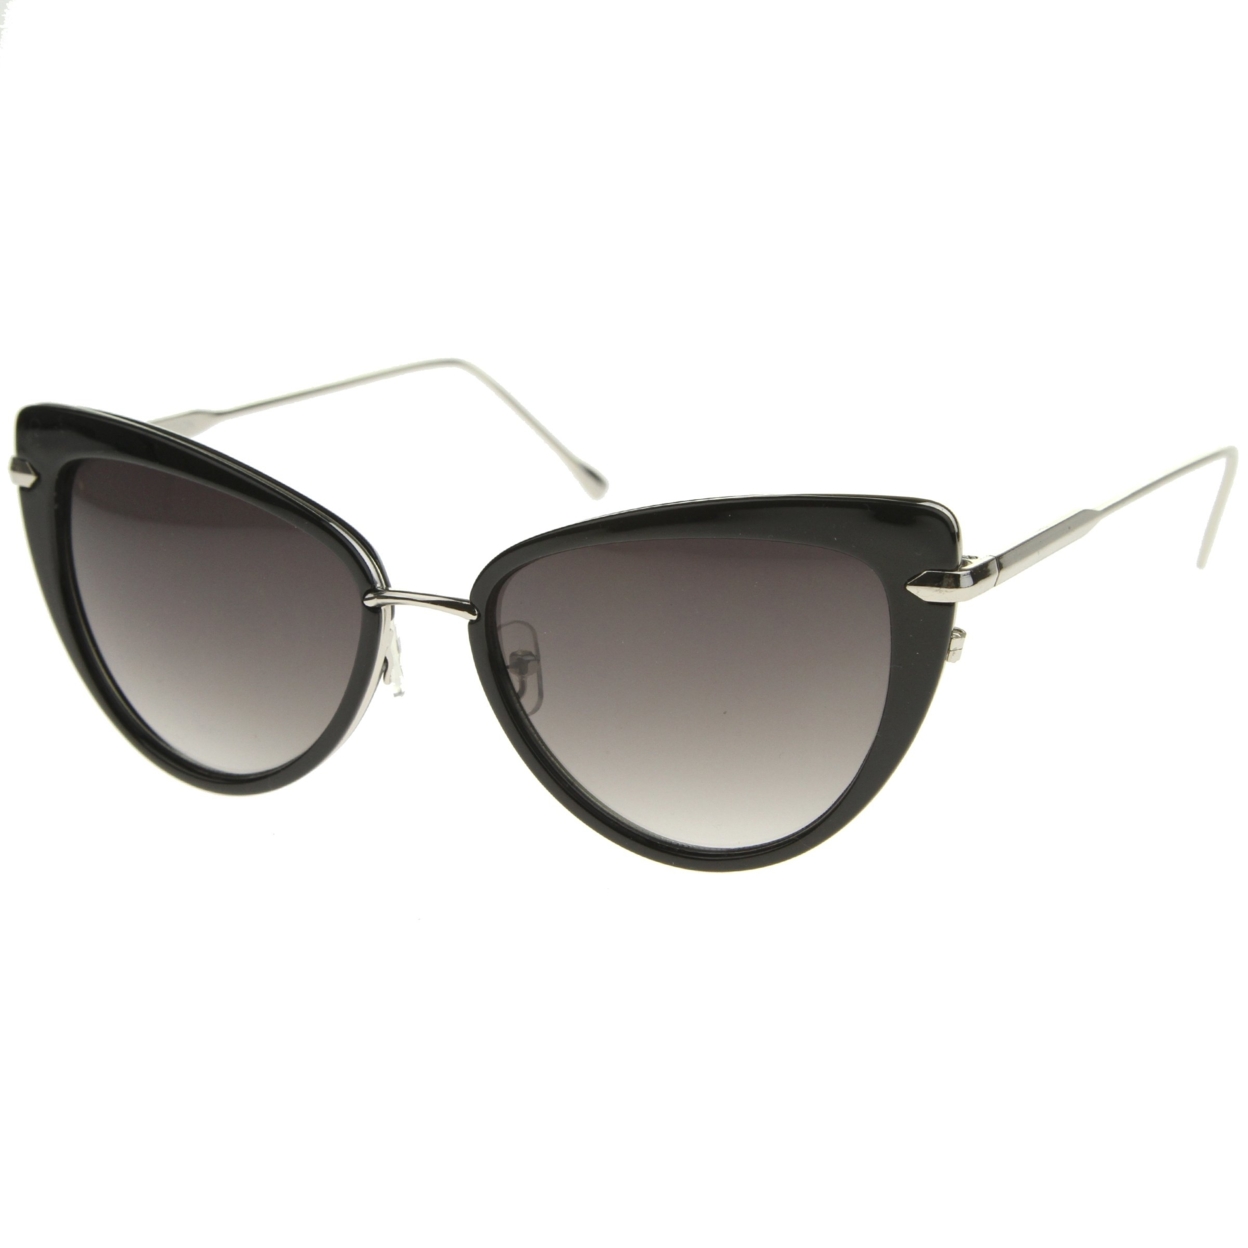 Women's Glam High Fashion Ultra Thin Metal Temple Cat Eye Sunglasses 55mm - Block-Tortoise / Amber